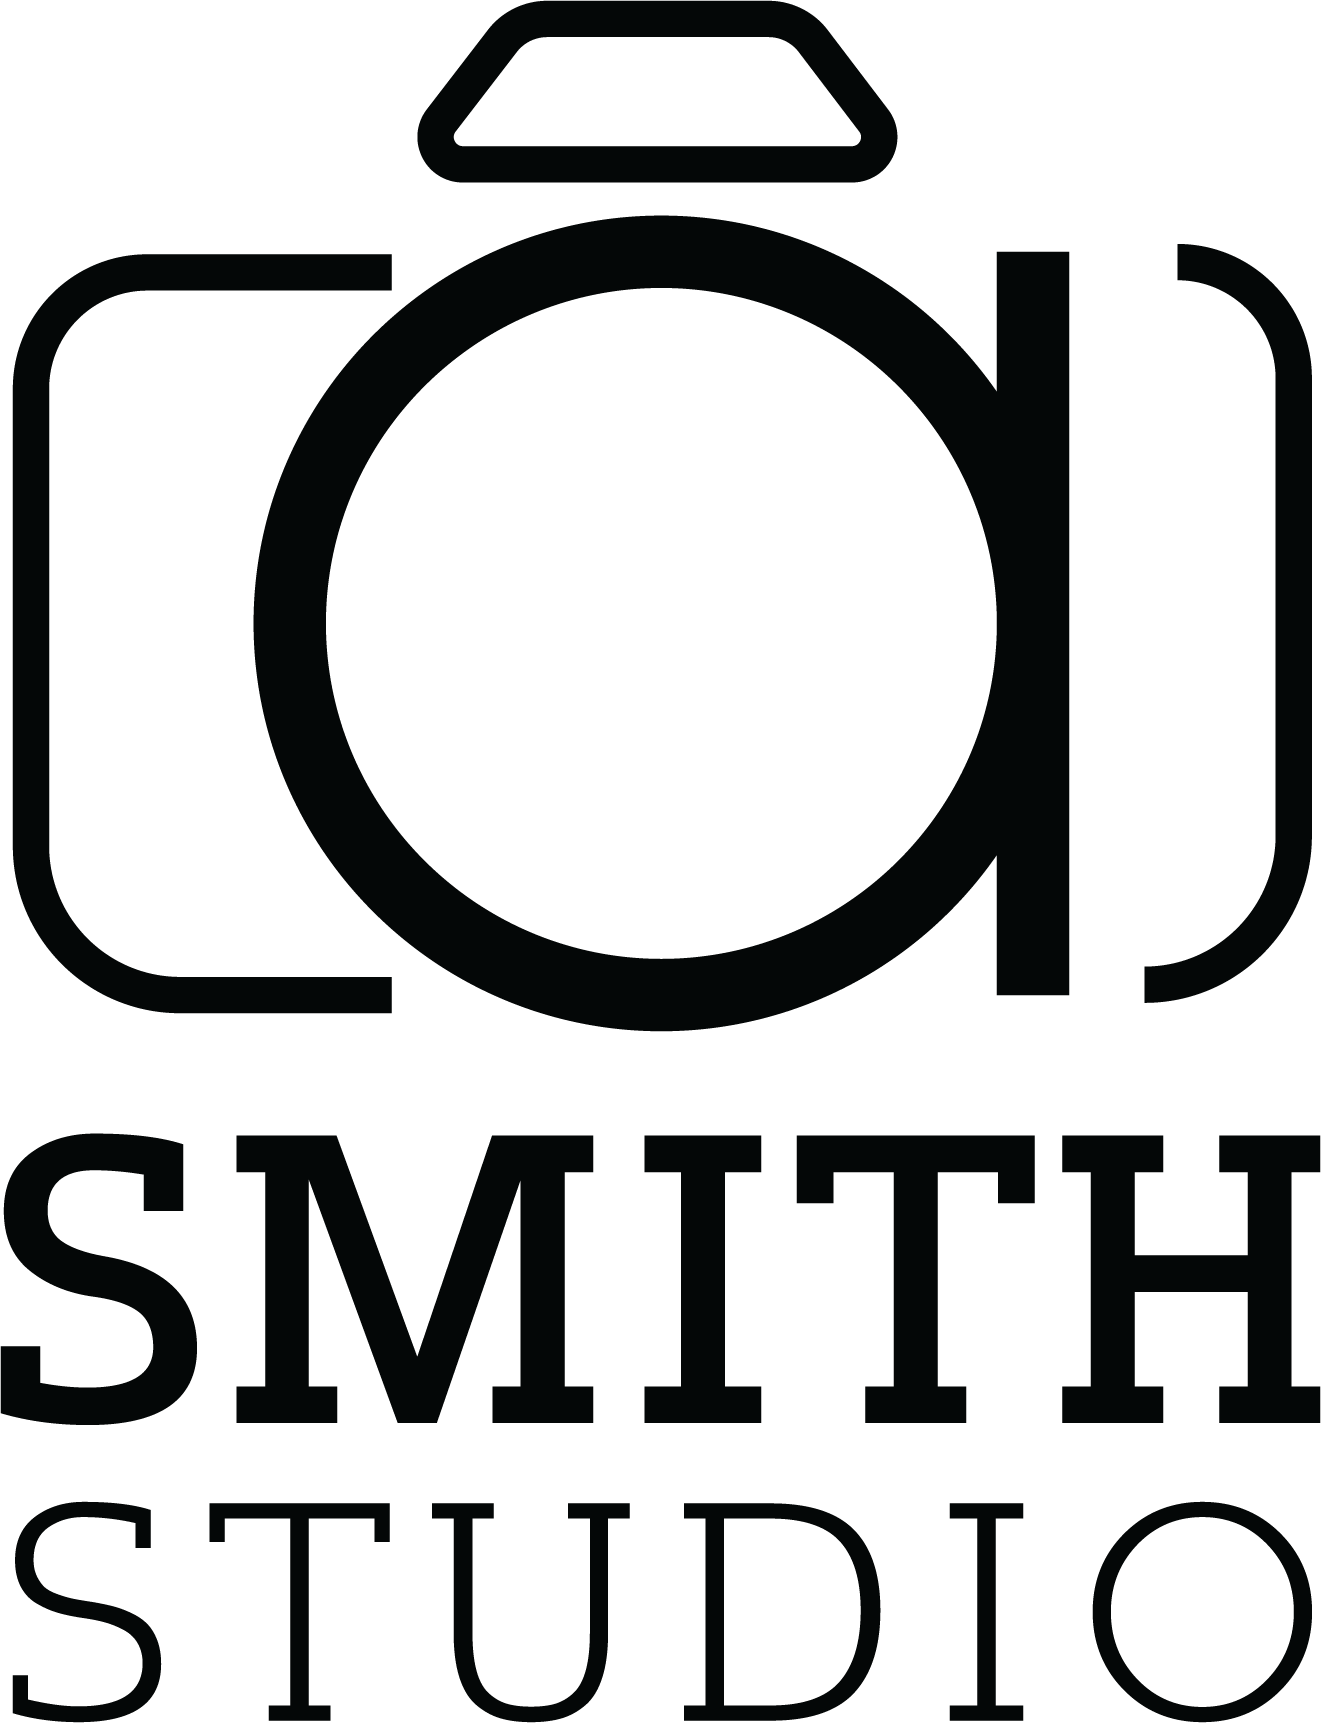 A Smith Studio